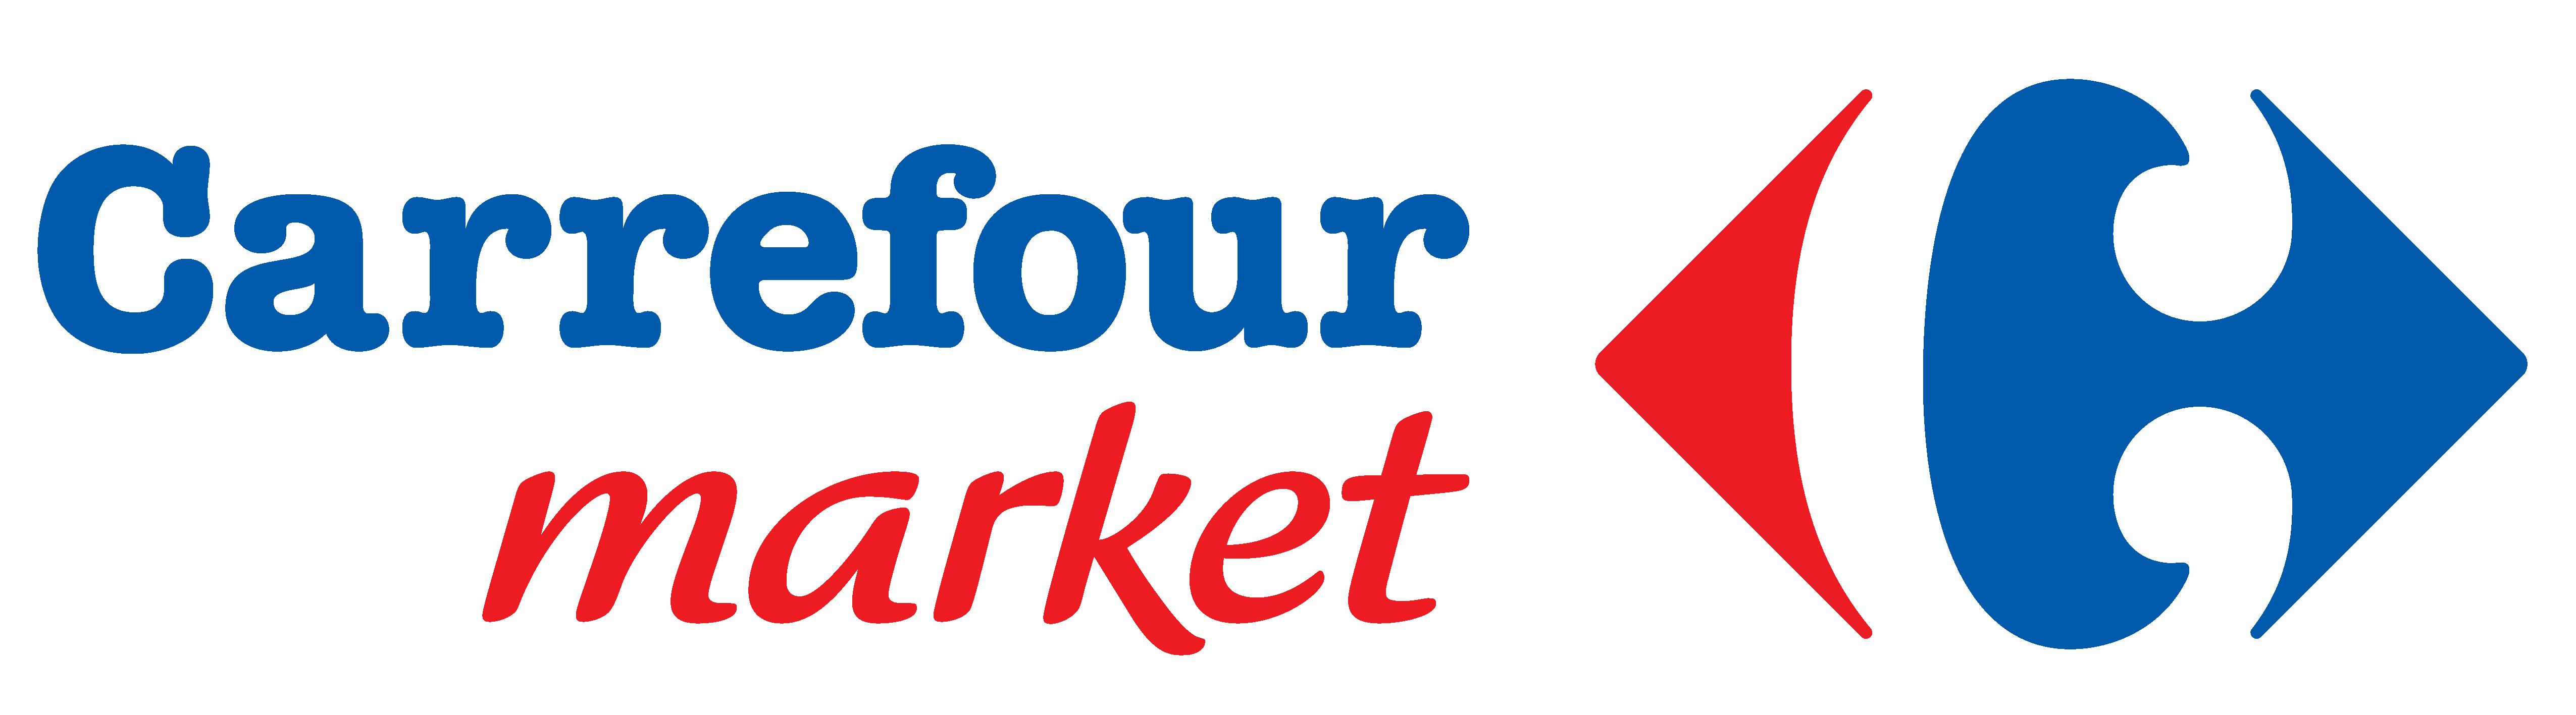 CarreFour Market logo></td>
      <td><img src=